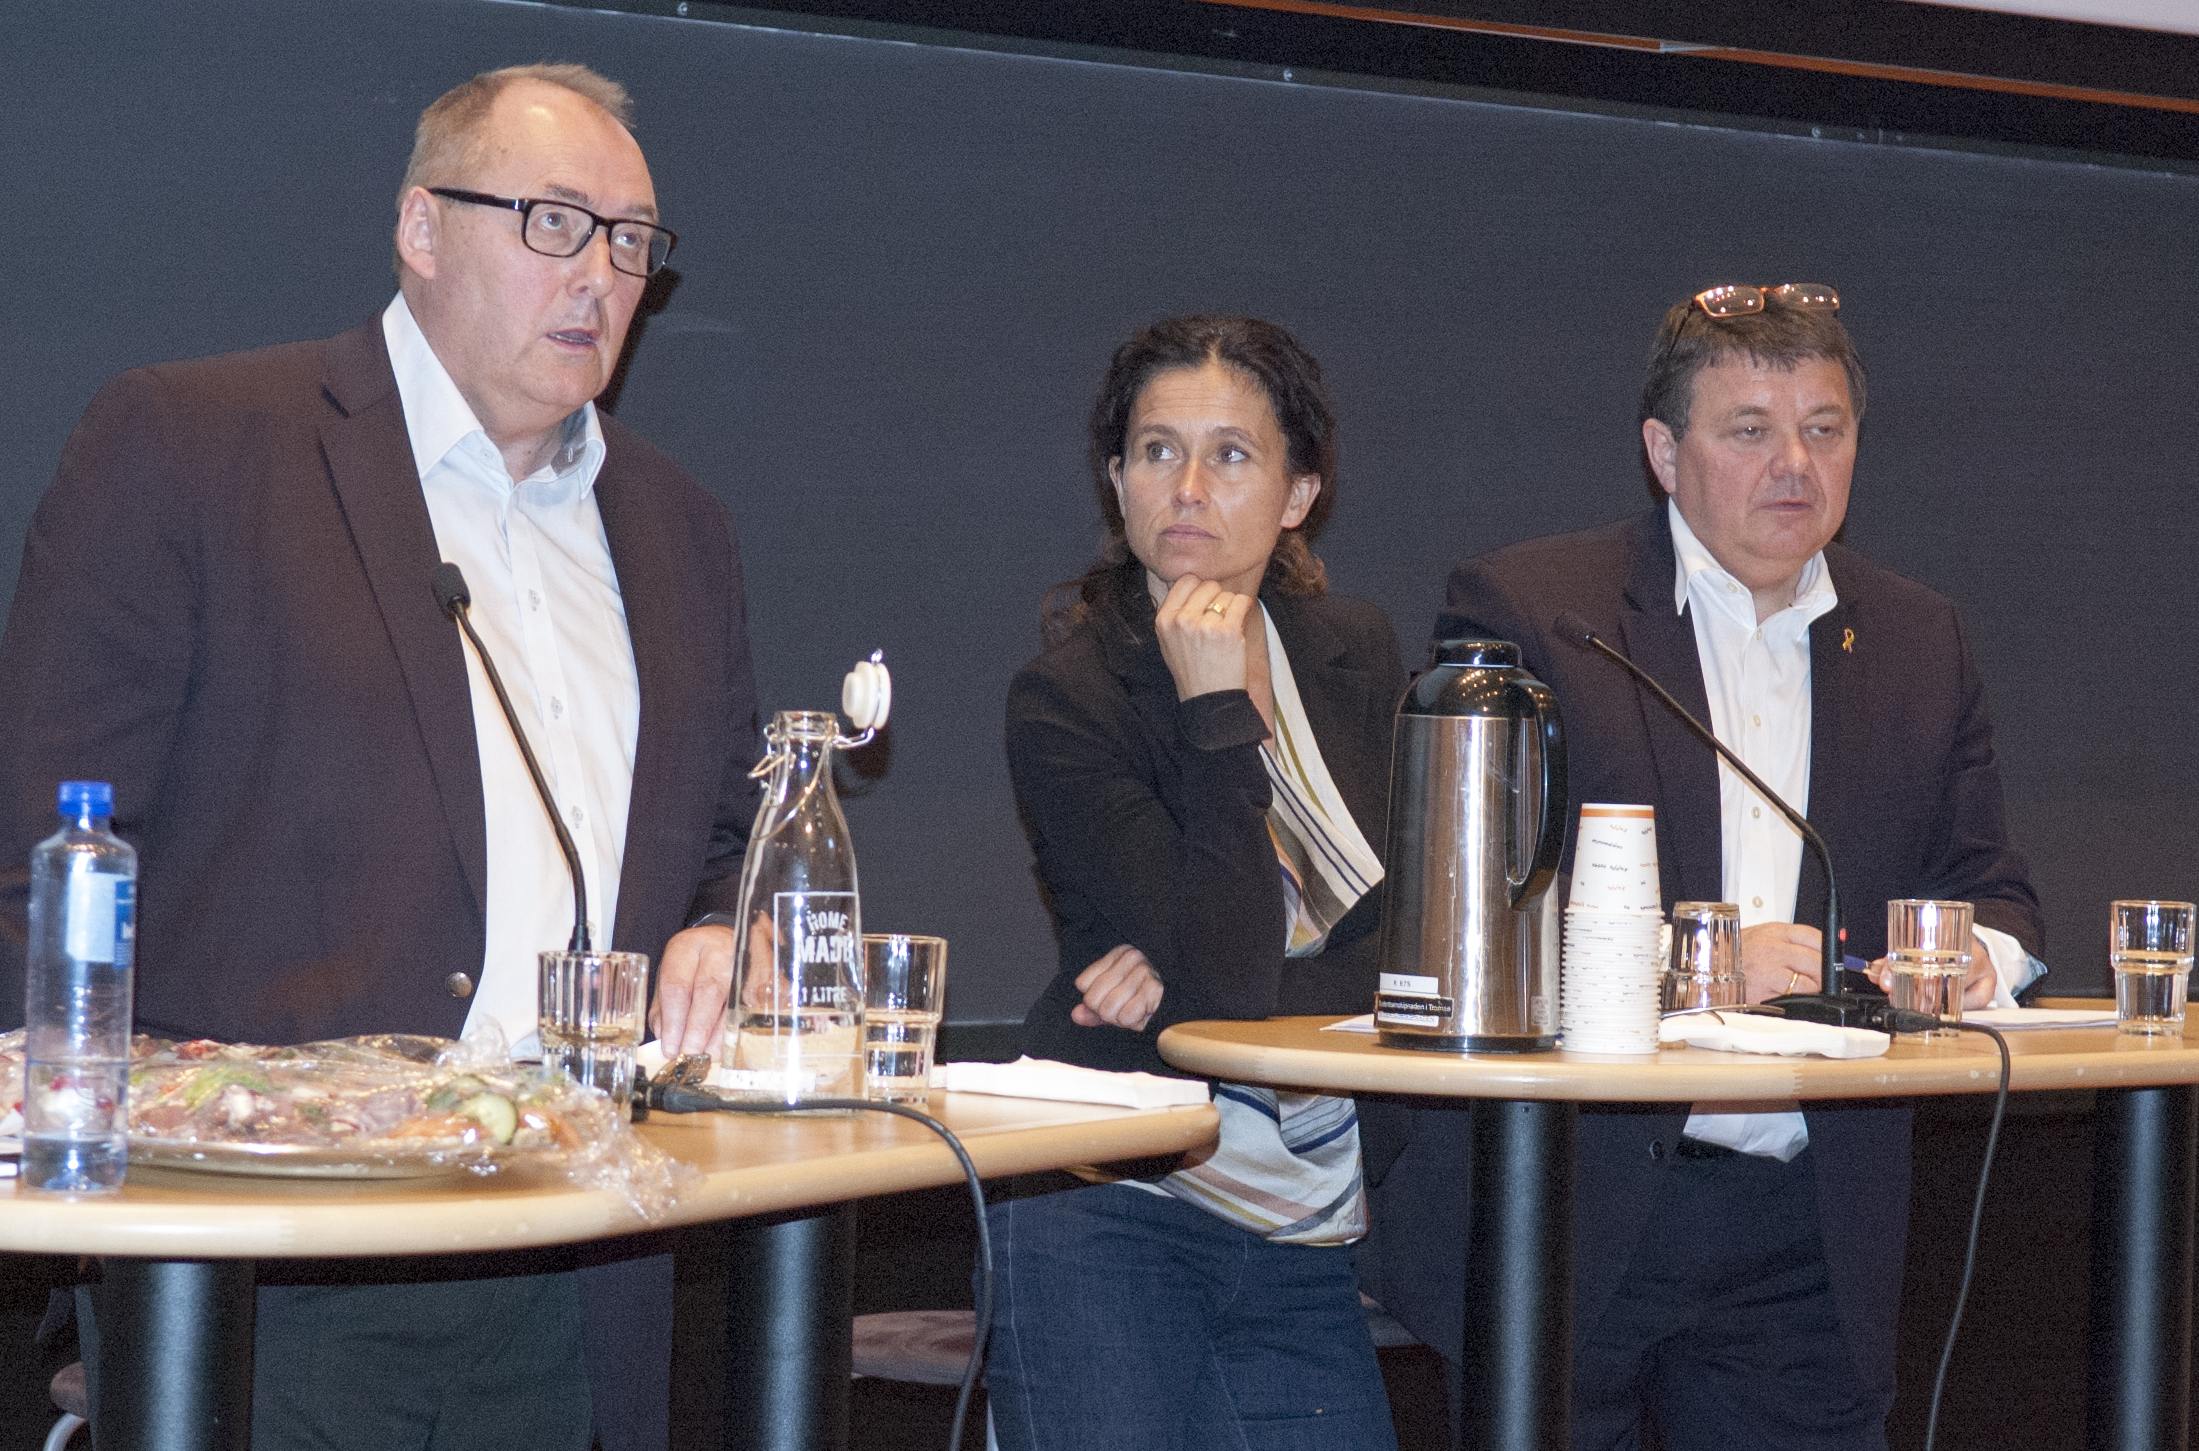 Leder for ekspertgruppa, Rolf Tamnes (t.v.), deltok i debatten sammen med Julie Wilhelmsen og Øystein Bø. Foto: Karine Nigar Aarskog